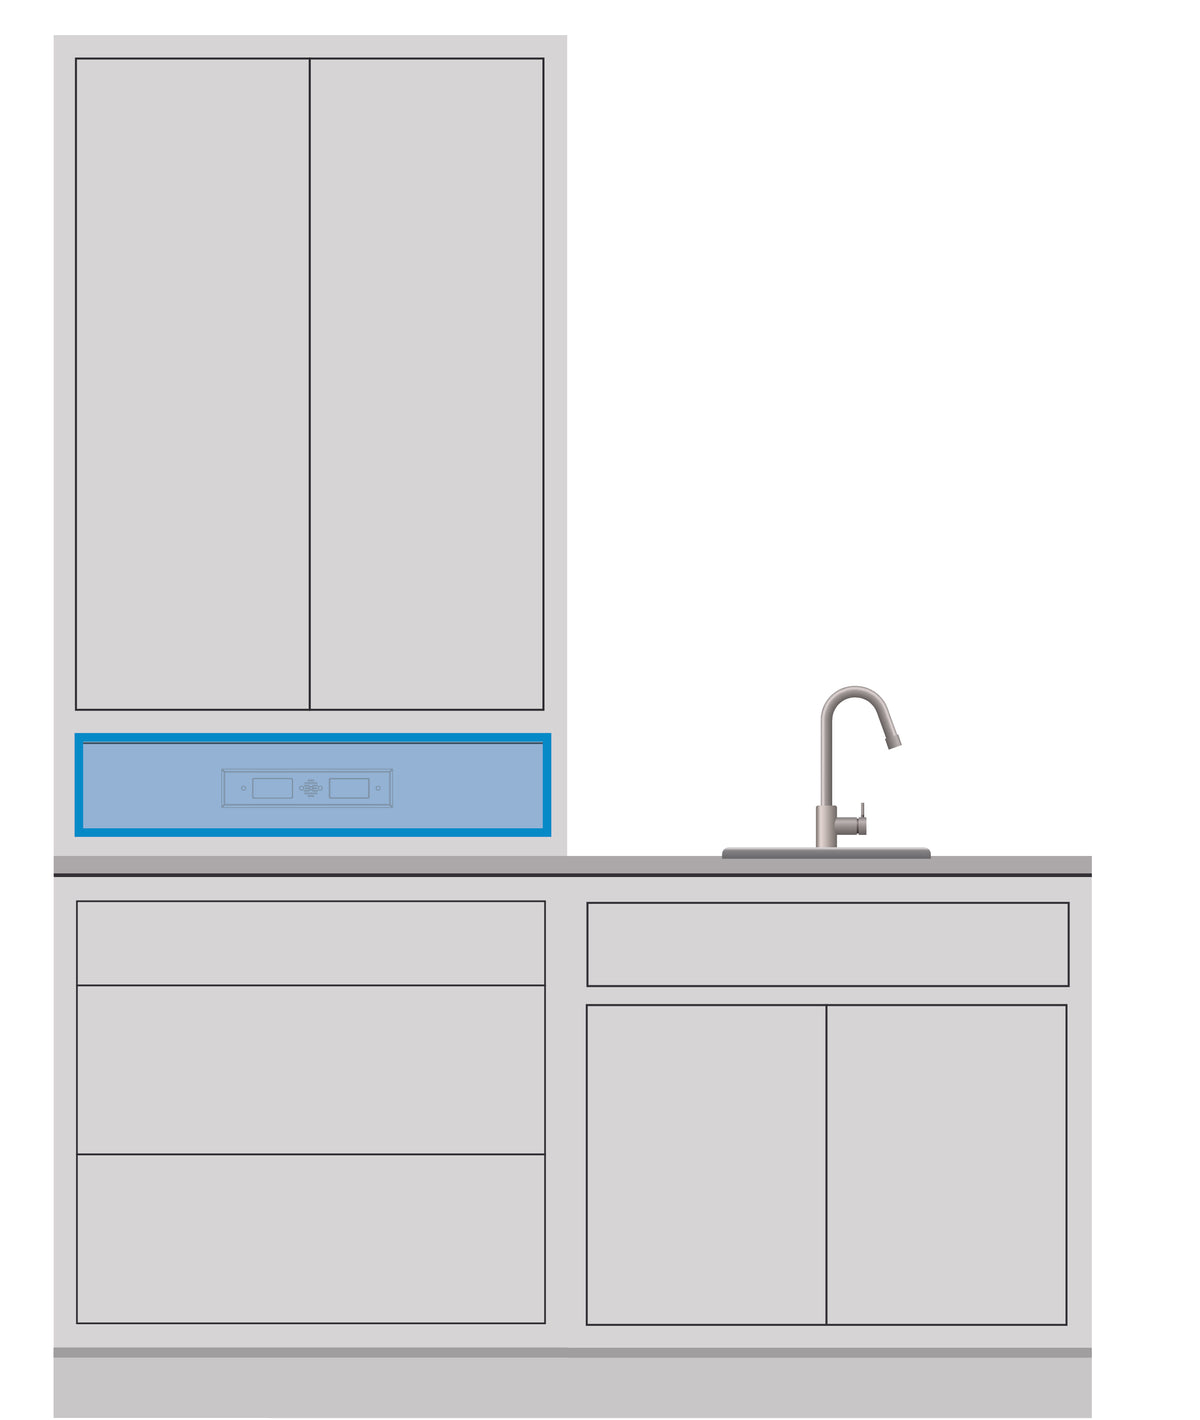 kitchen cabinet illustration